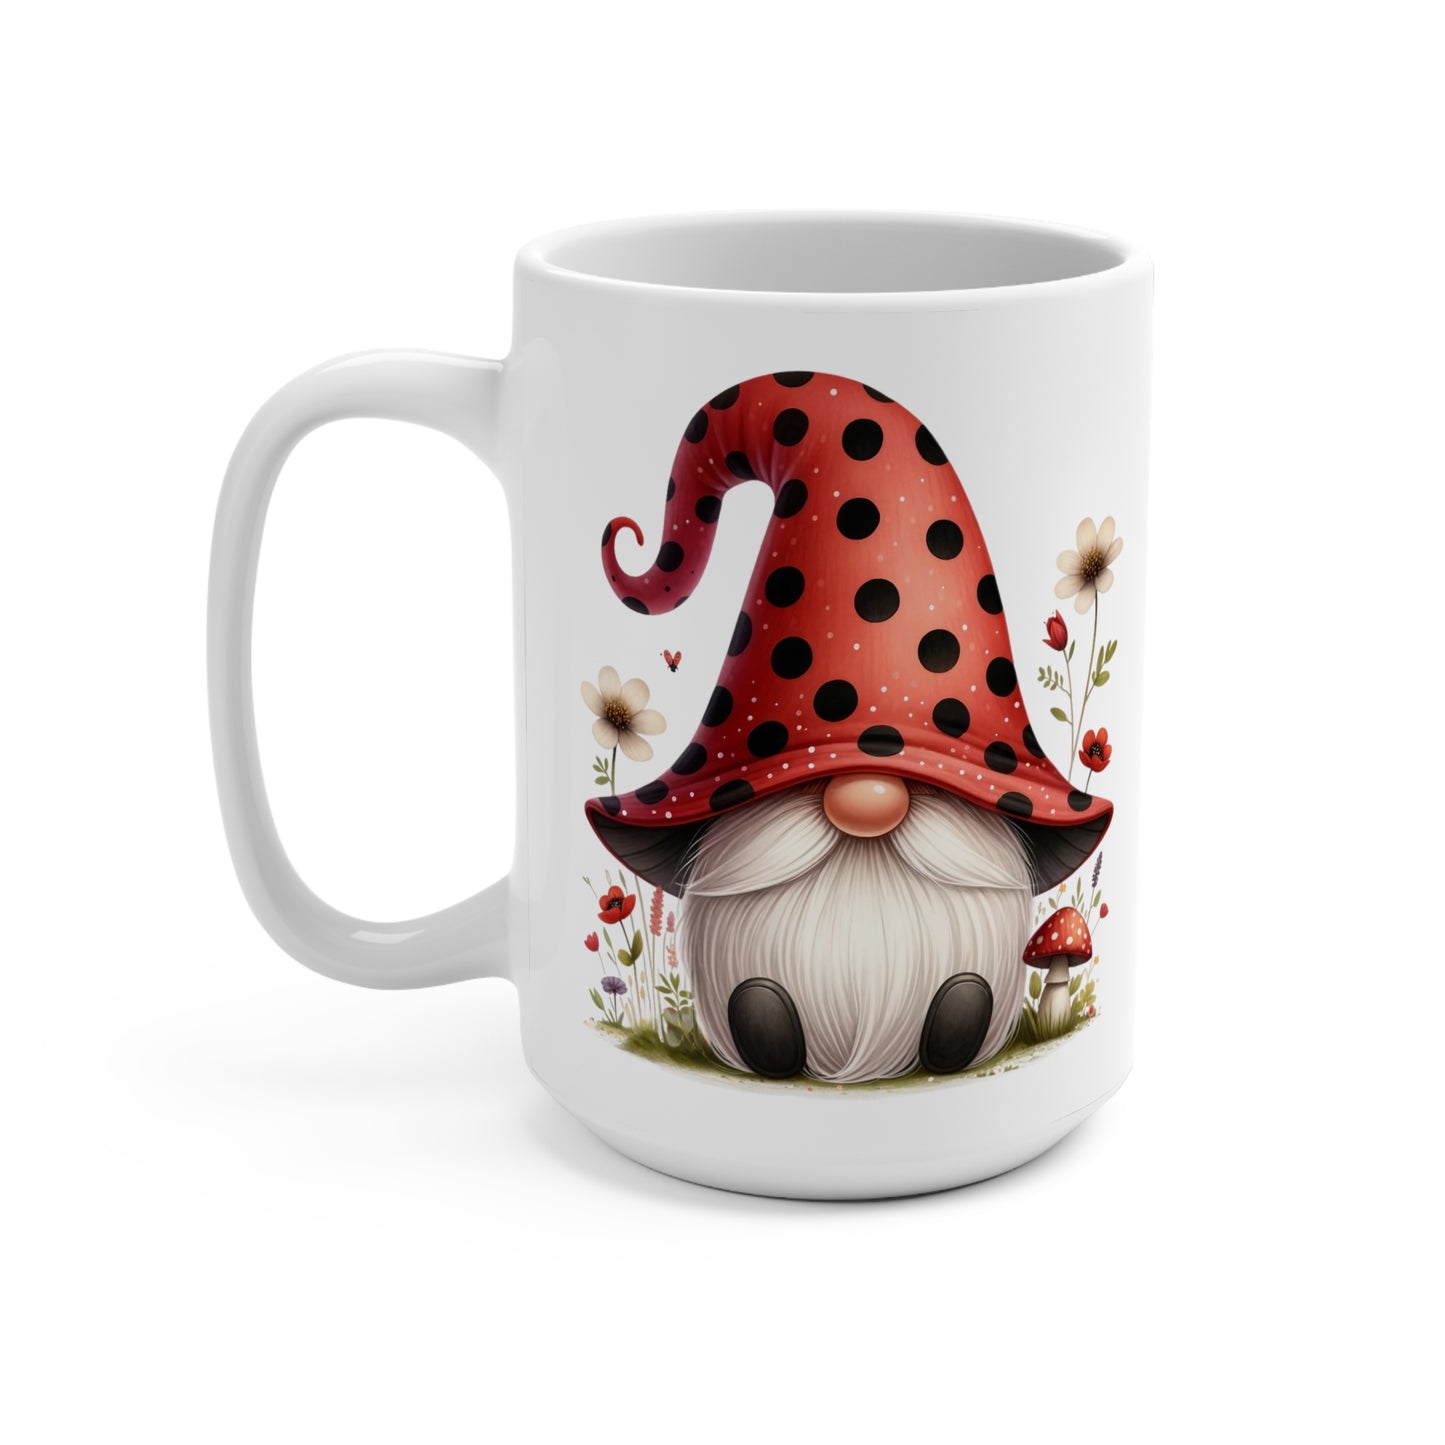 Whimsical Garden Gnome Mug, Red Polka Dot Hat, Cute Floral Coffee Cup, Unique Gift Idea, Mug 15oz